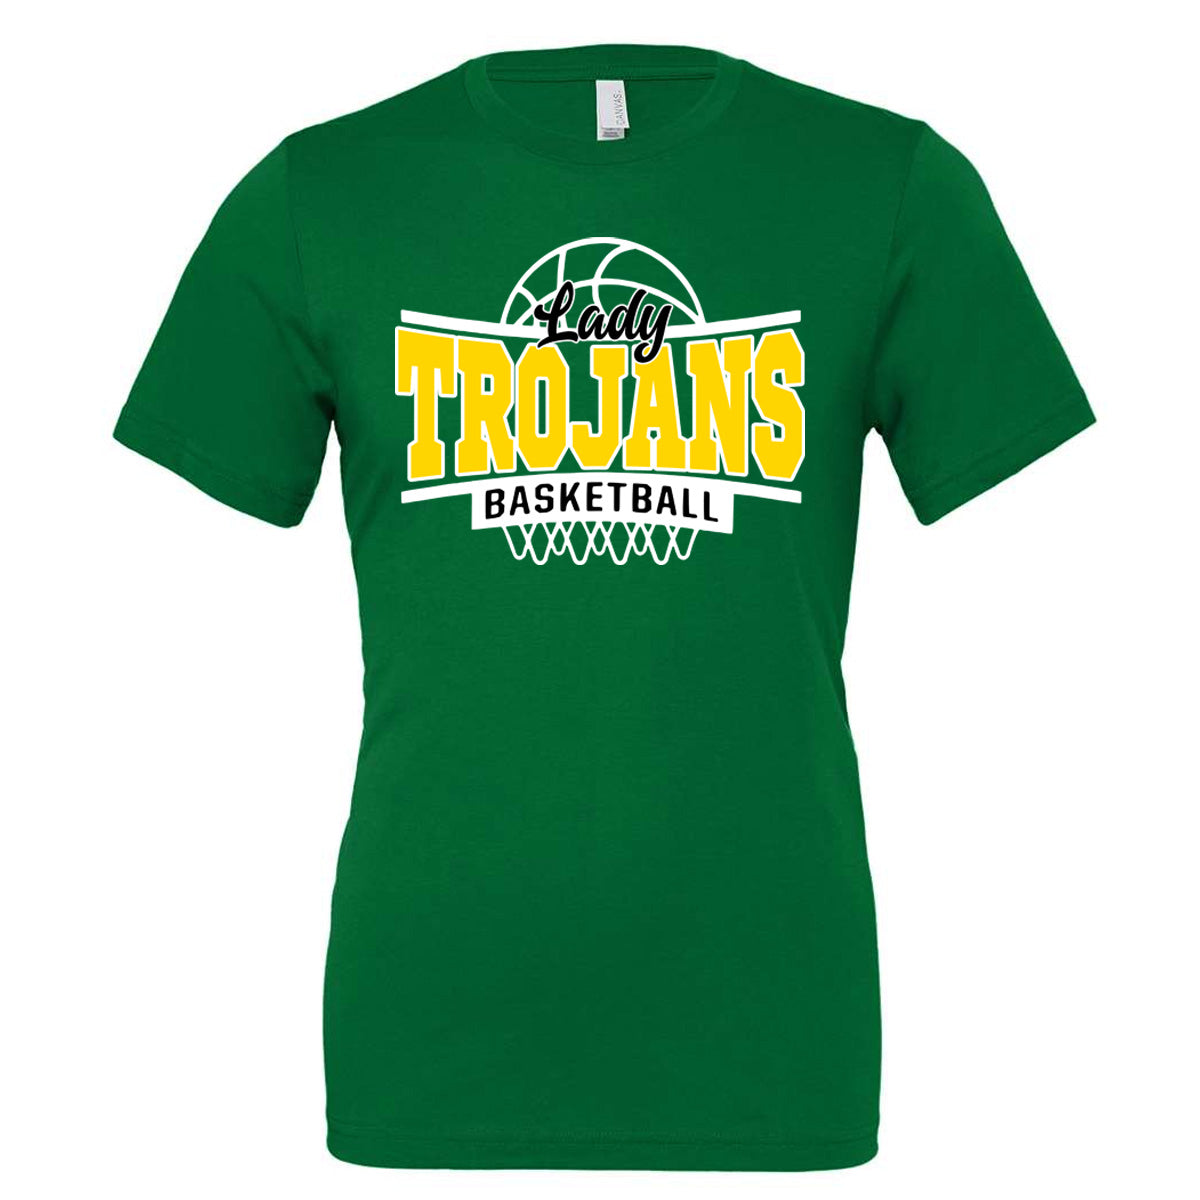 Twiggs Academy - Curved Lady Trojans Basketball - Kelly (Tee/DriFit/Hoodie/Sweatshirt) - Southern Grace Creations